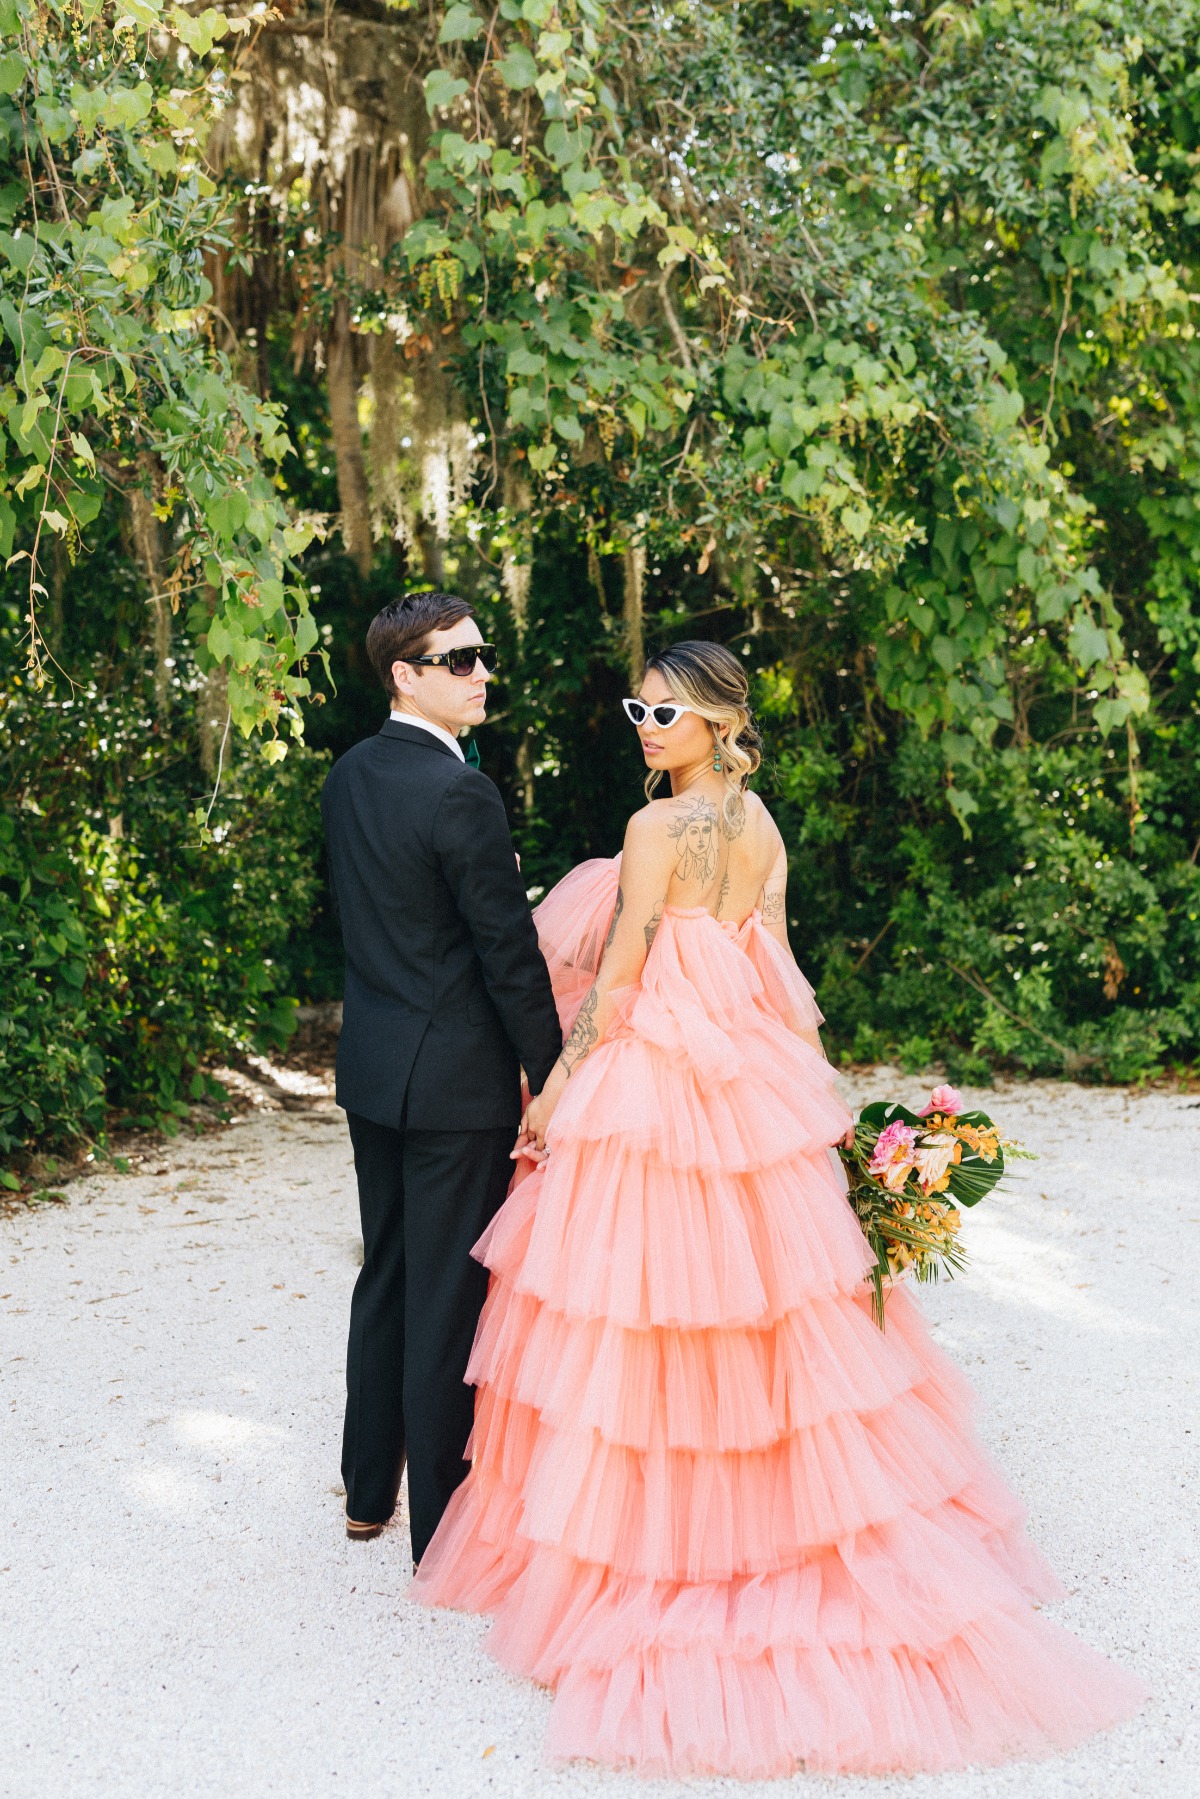 Bride and Groom looking back toward camera in sunglasses